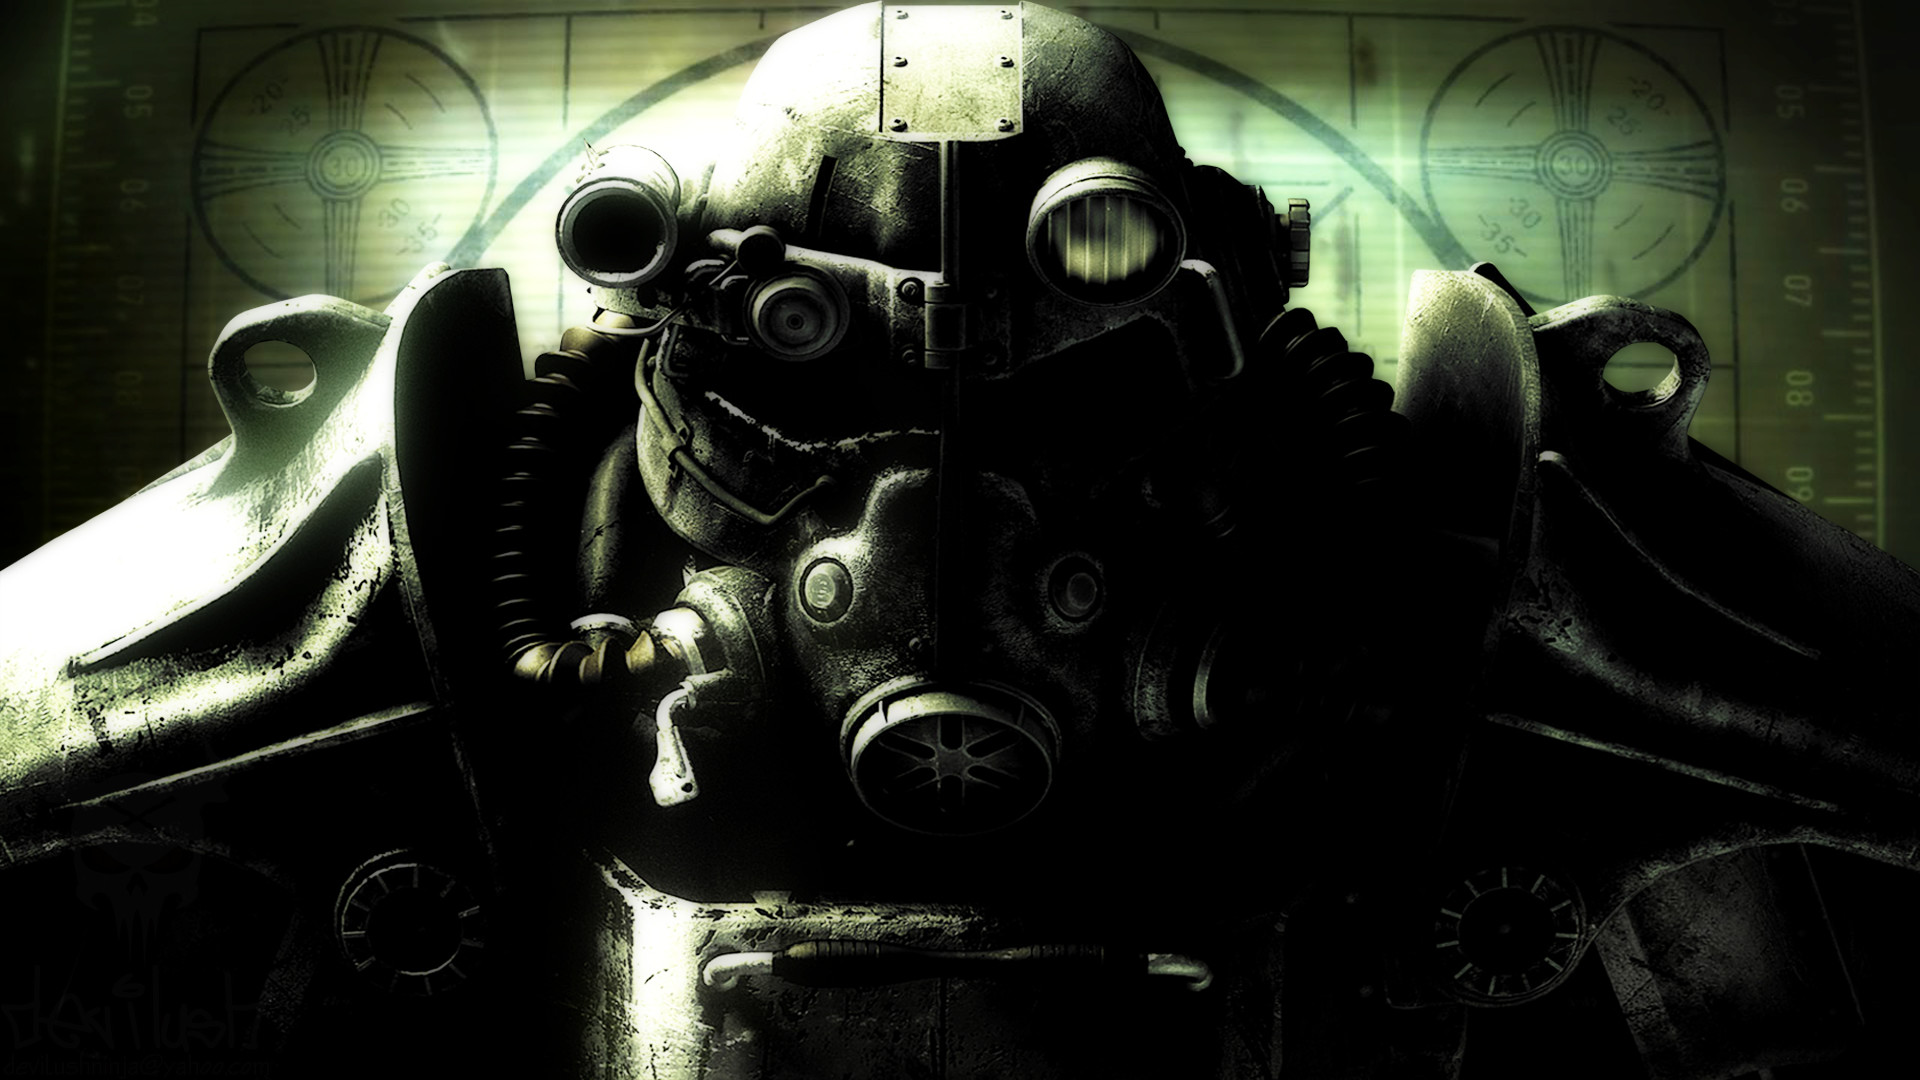 1920x1080 Fallout 3 BoS PS3 HD Wallpaper by DEVILUSHNINJA on DeviantArt